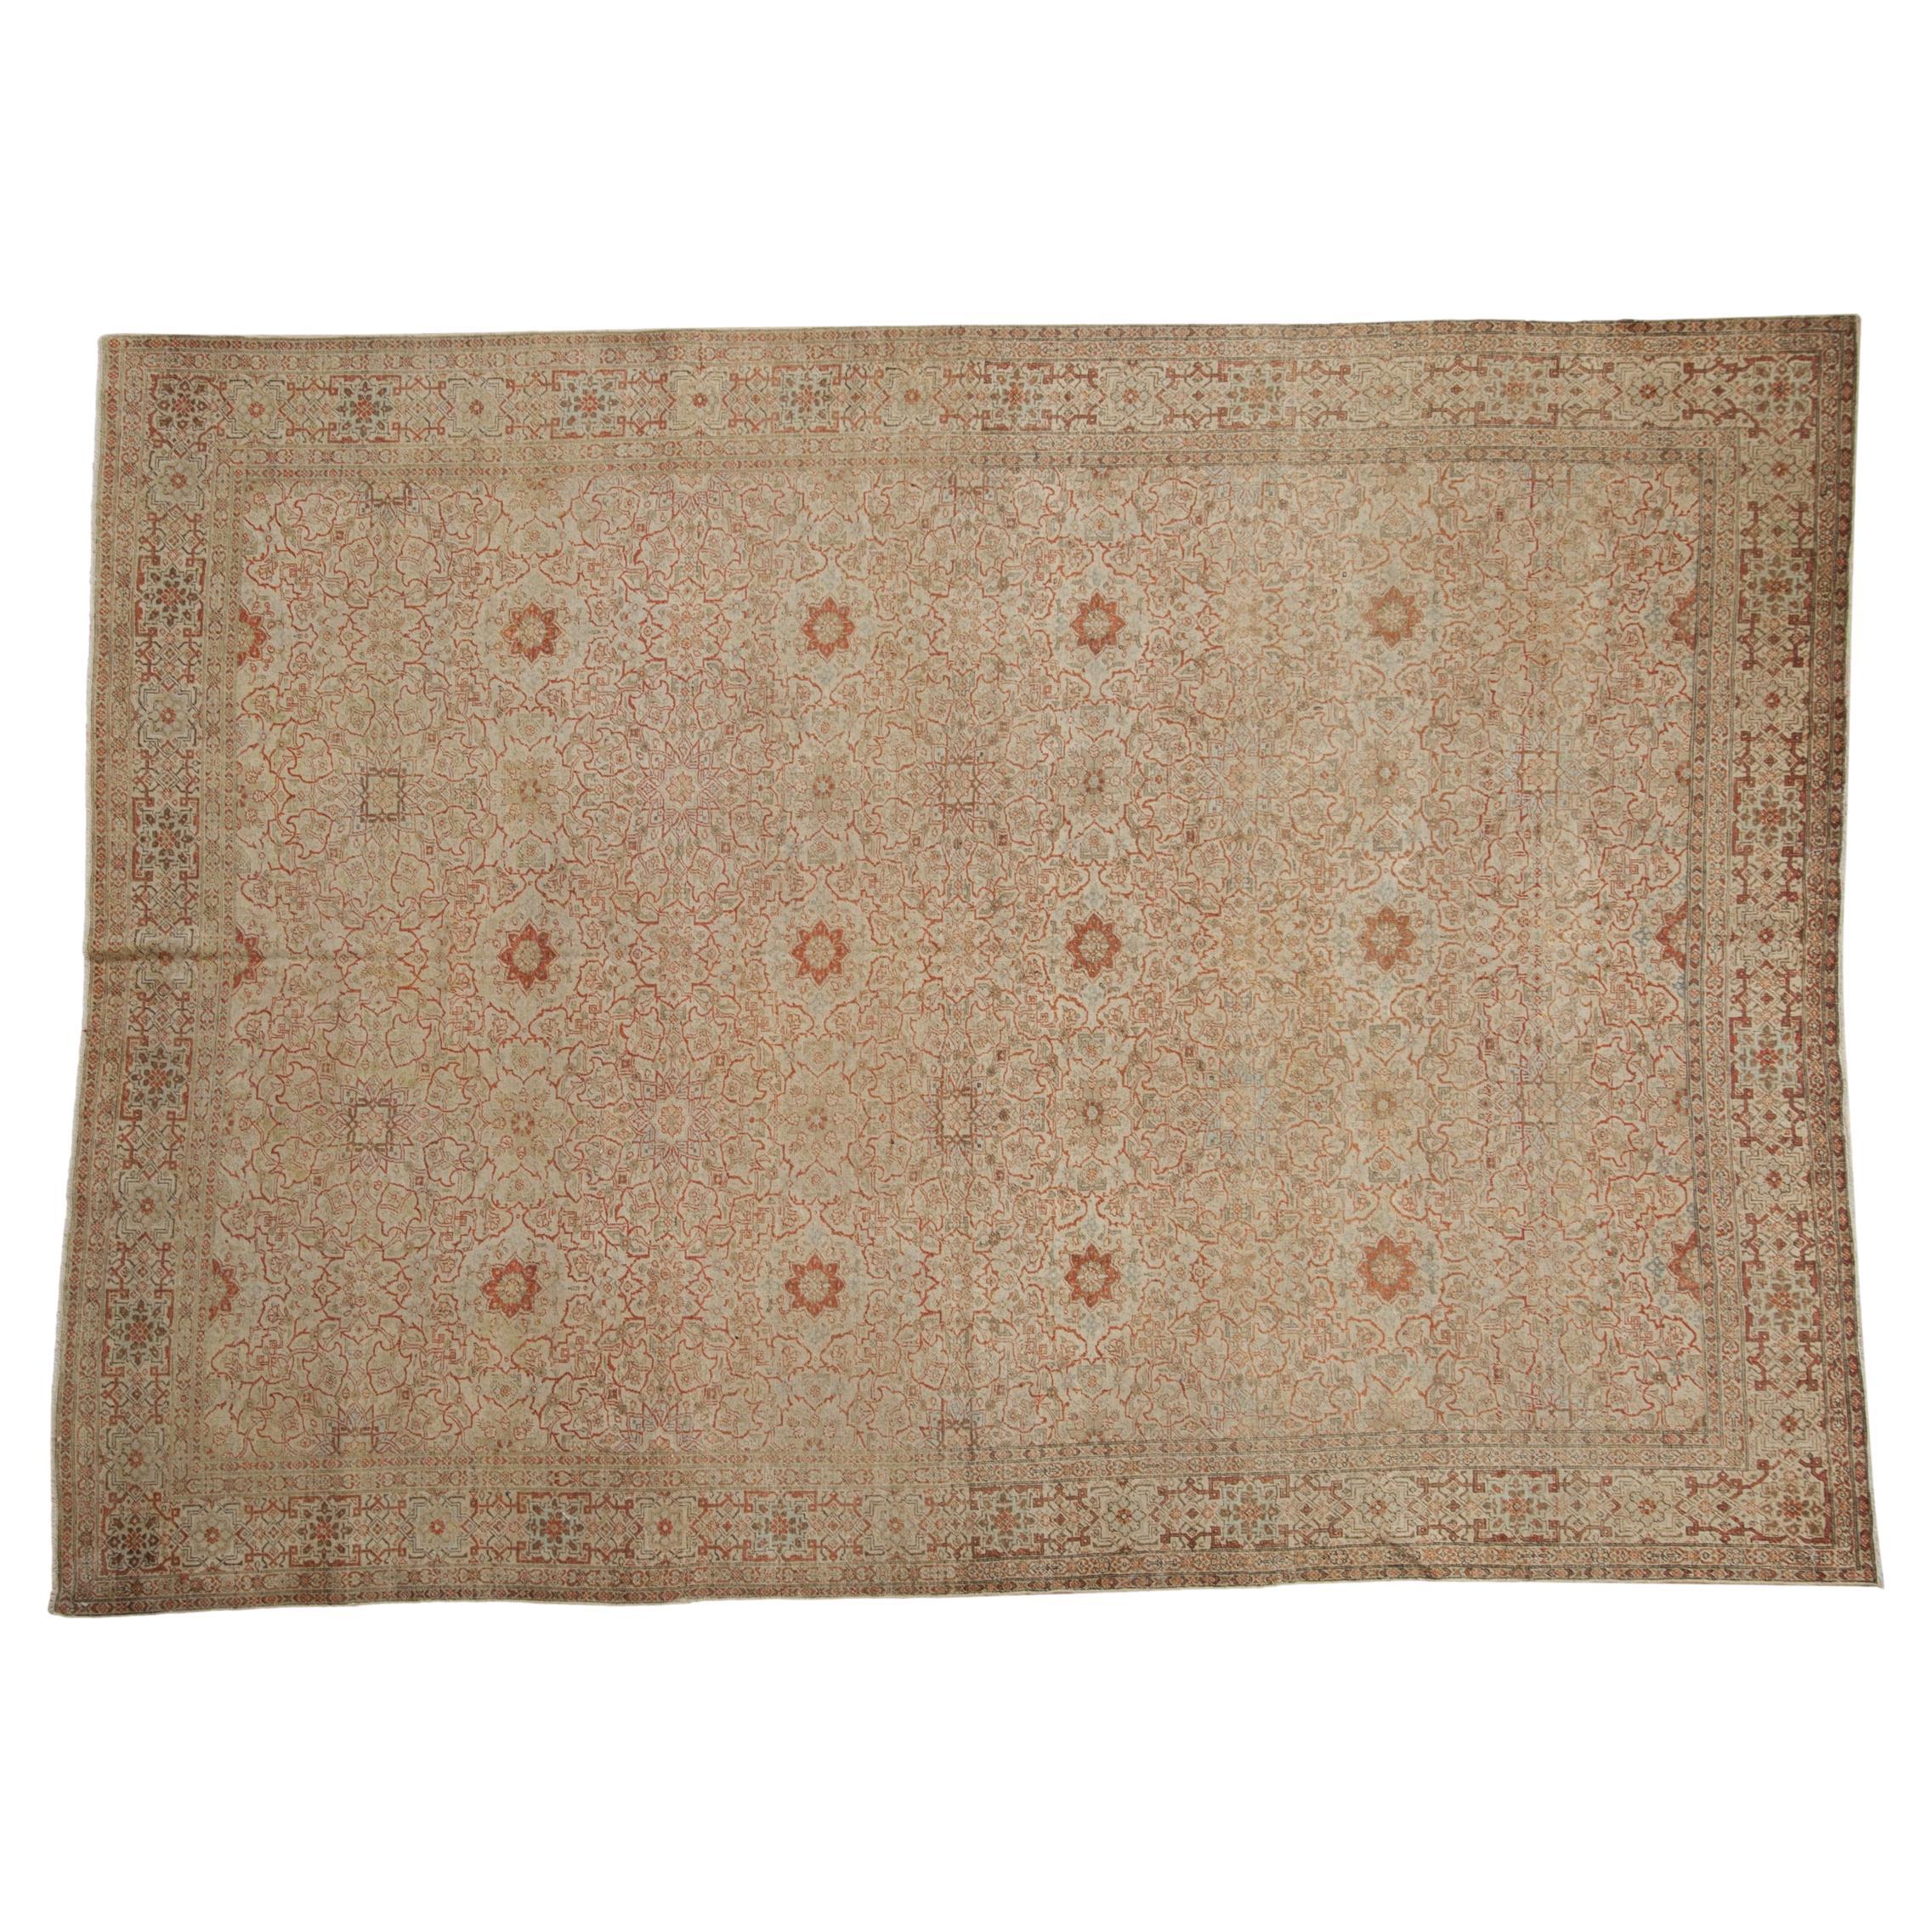 Antique Fine Distressed Tabriz Carpet